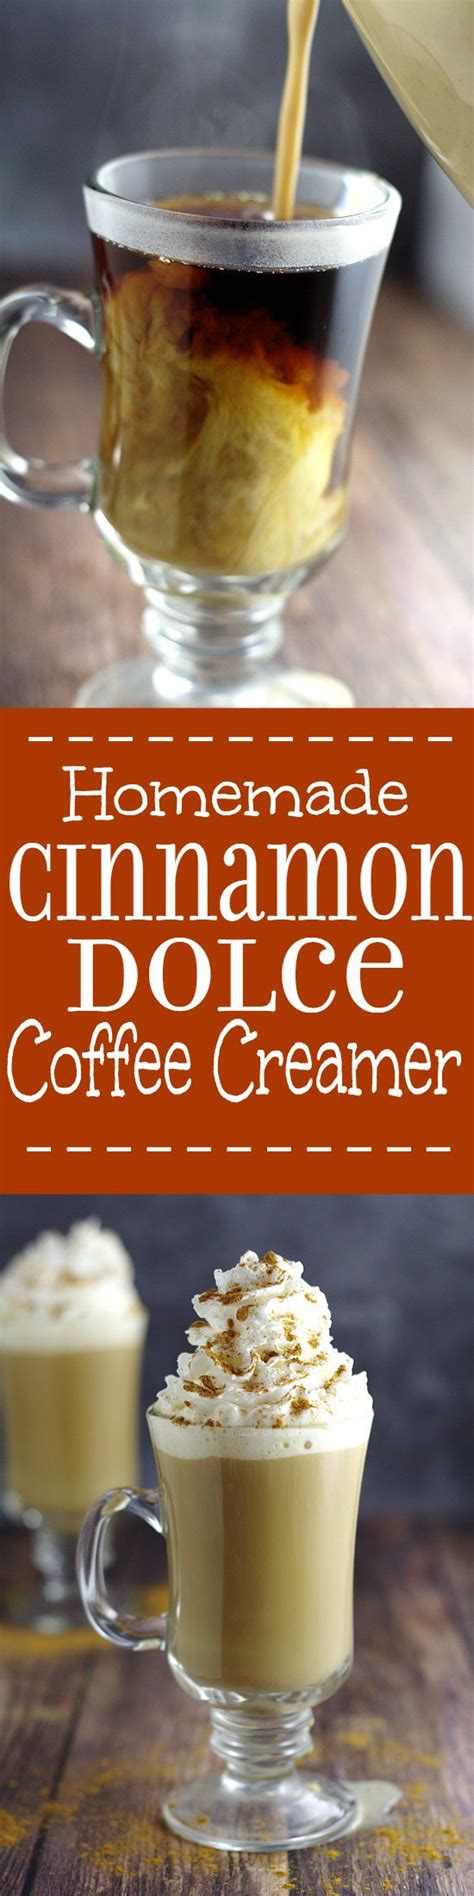 homemade-cinnamon-dolce-coffee-creamer-the image